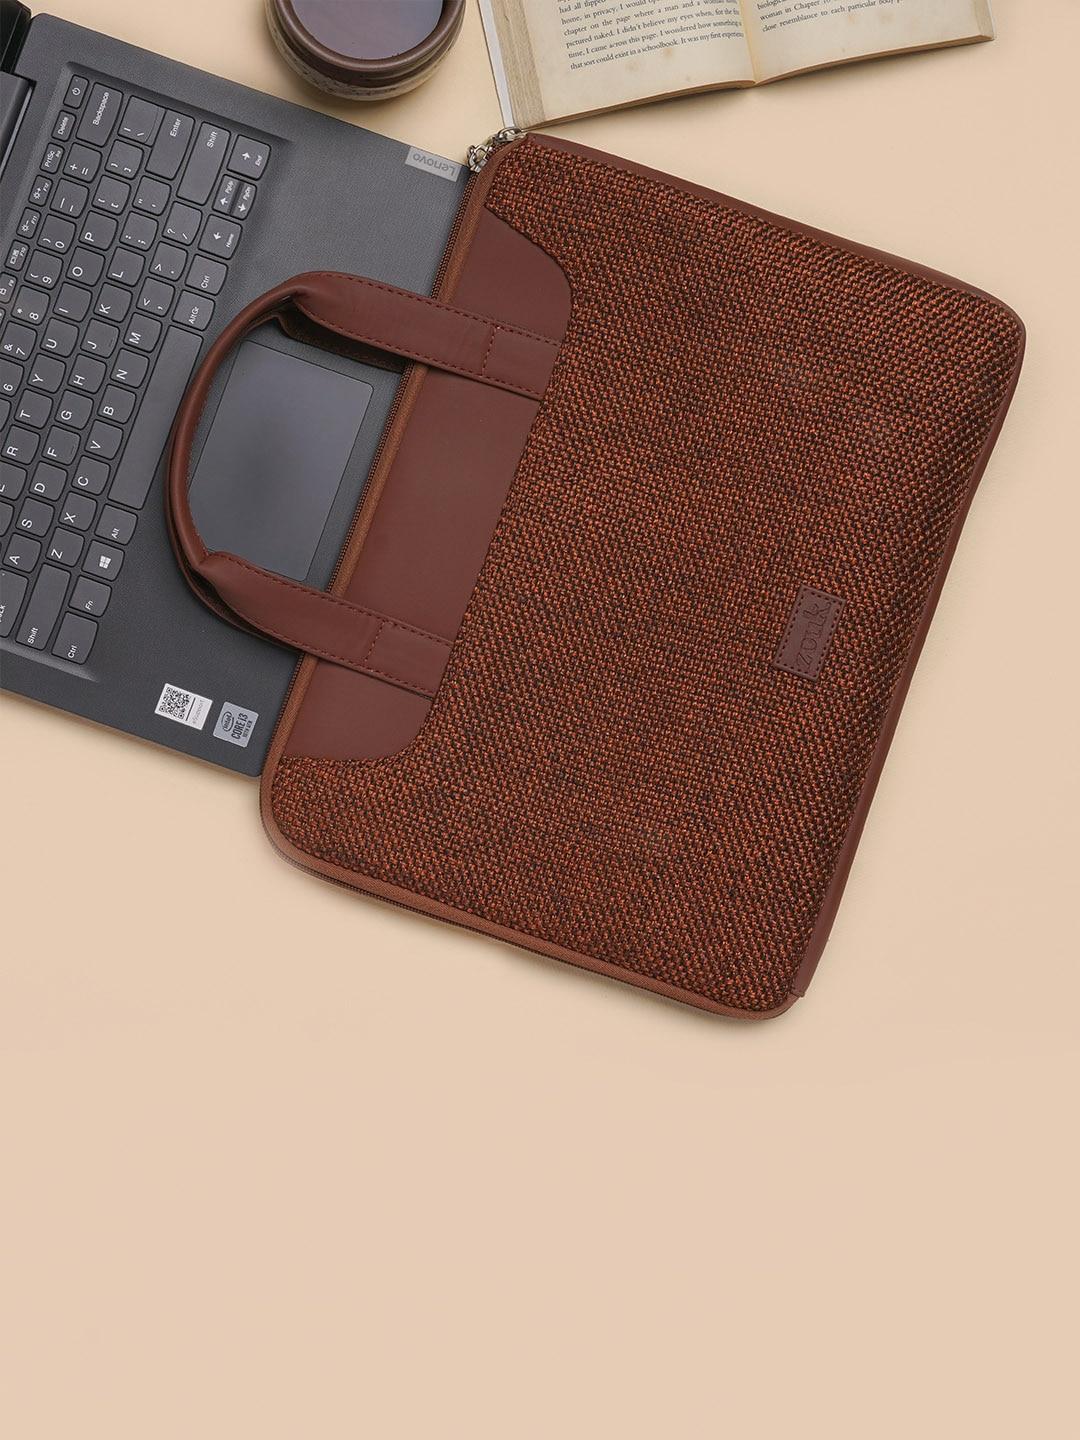 zouk men brown printed jute laptop sleeve